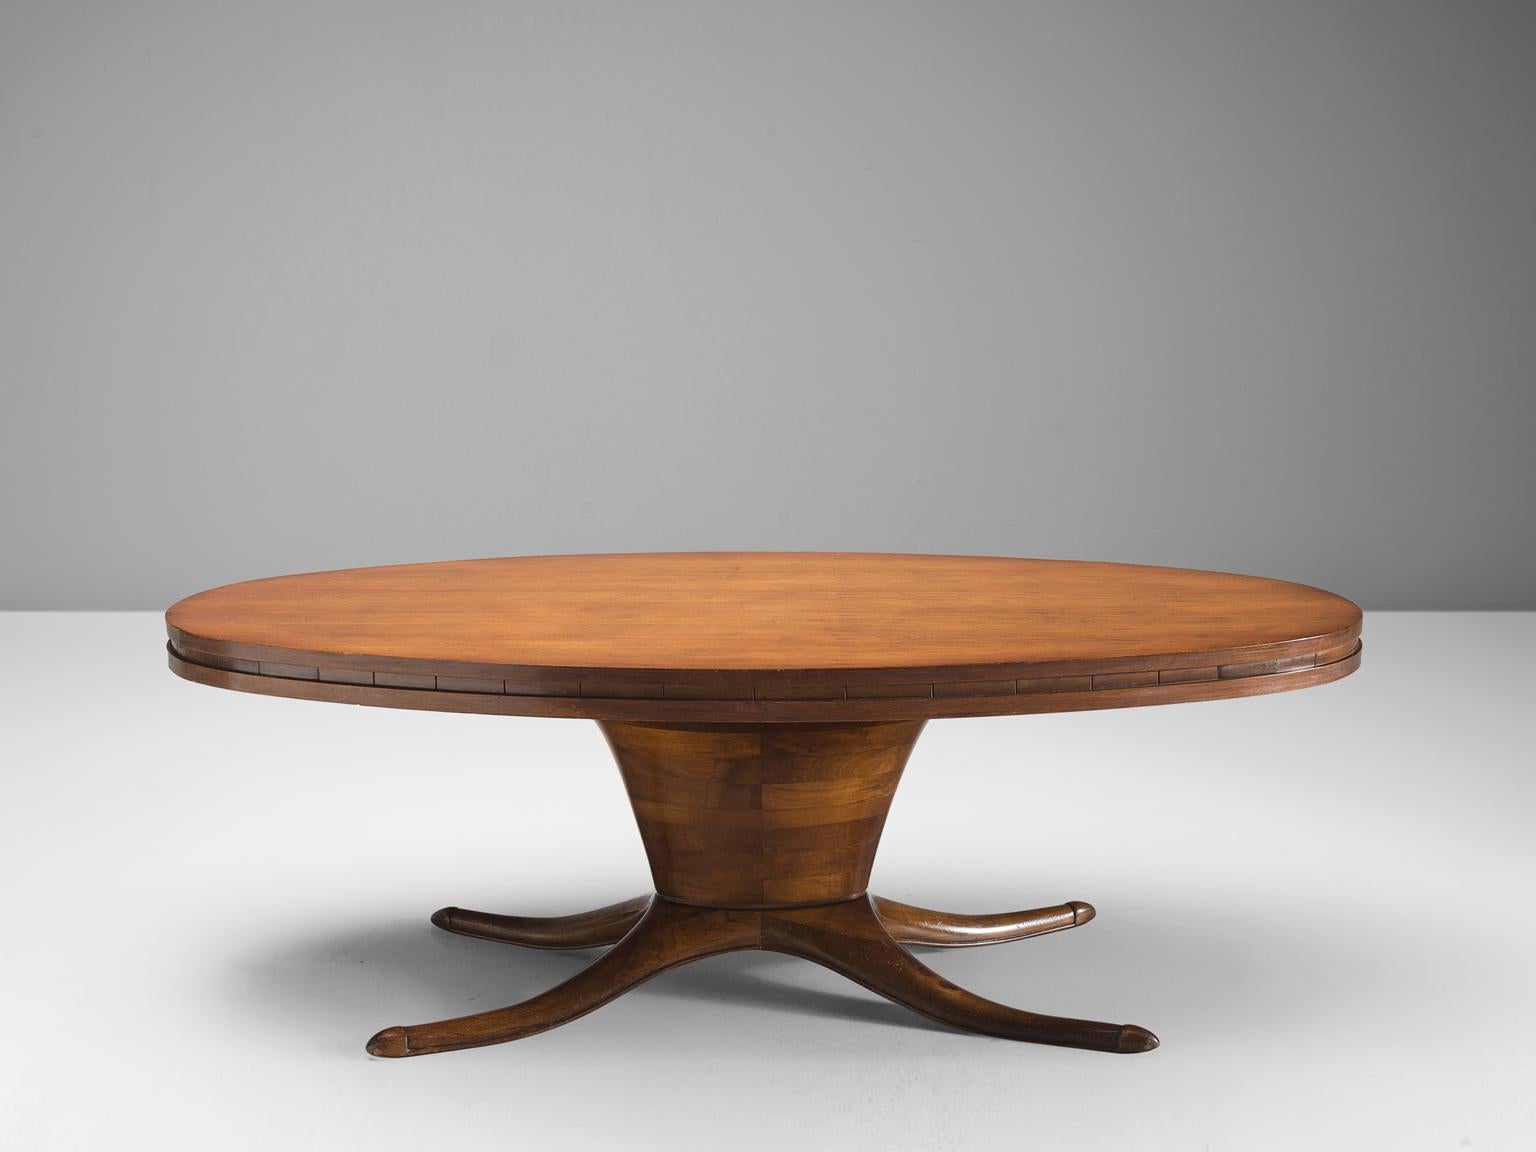 Italian Midcentury Oval Centre Table in Walnut, circa 1950